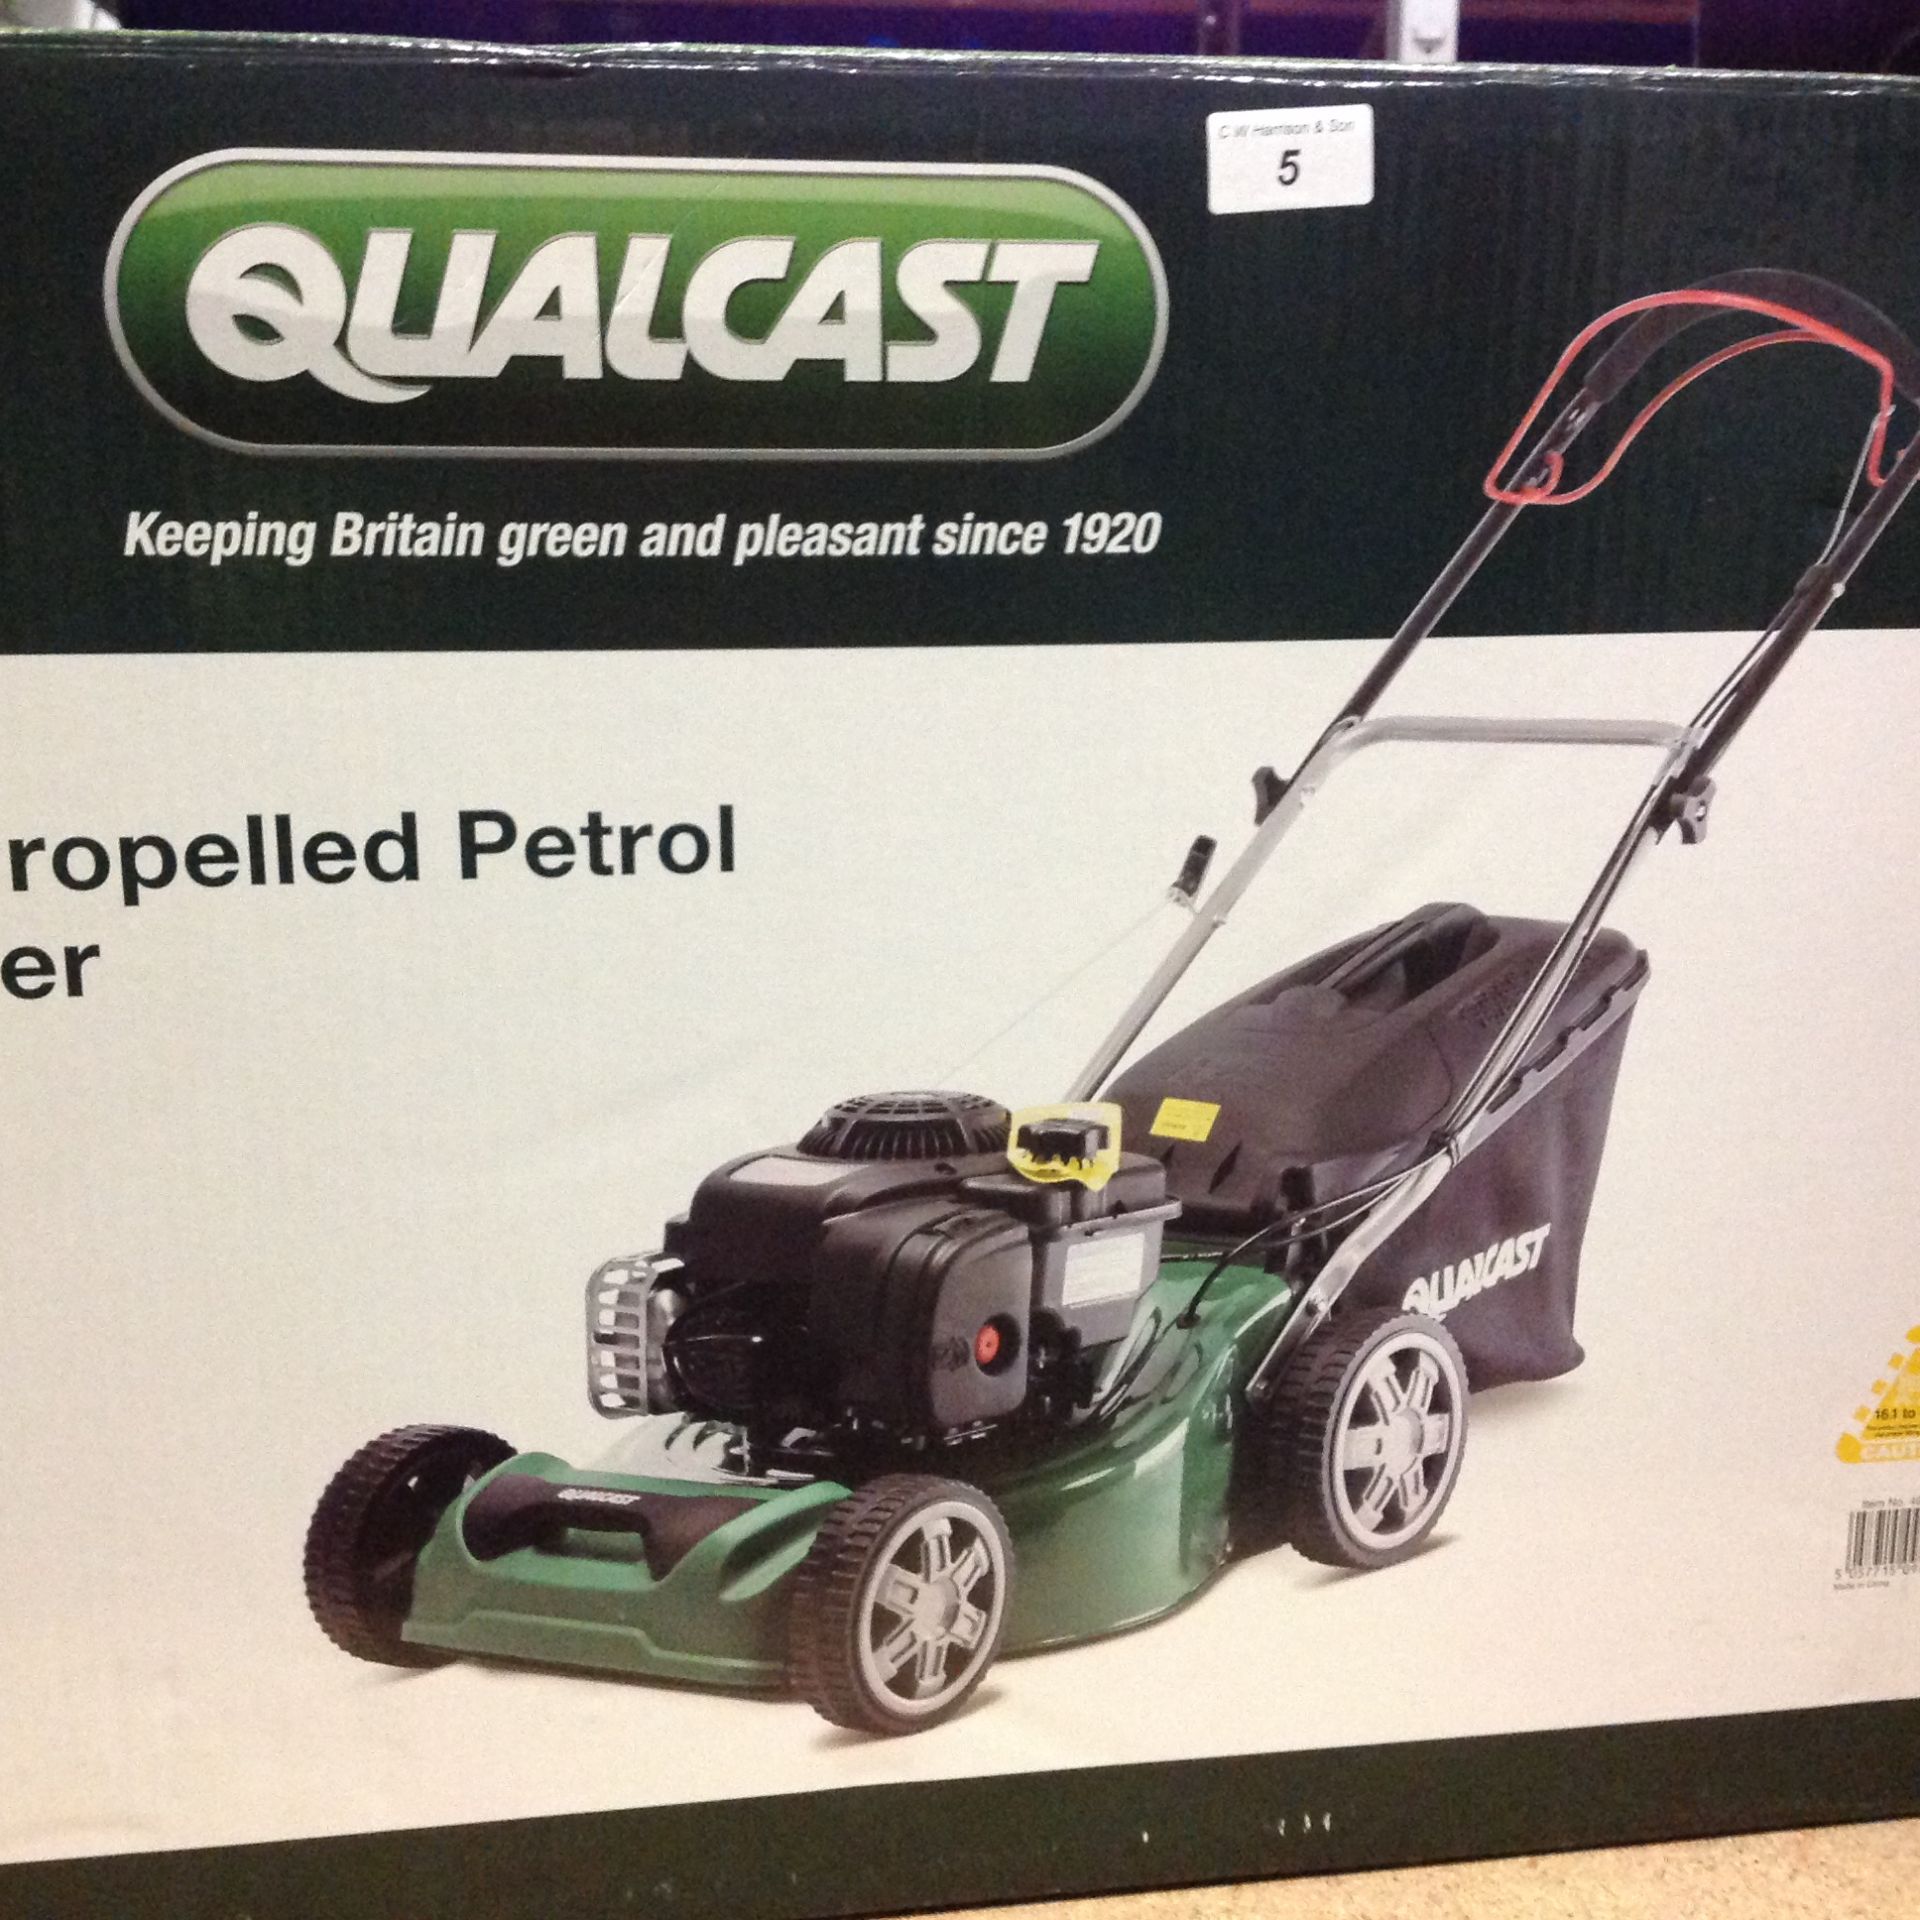 Qualcast 41cm 125cc self propelled petrol rotary lawn mower